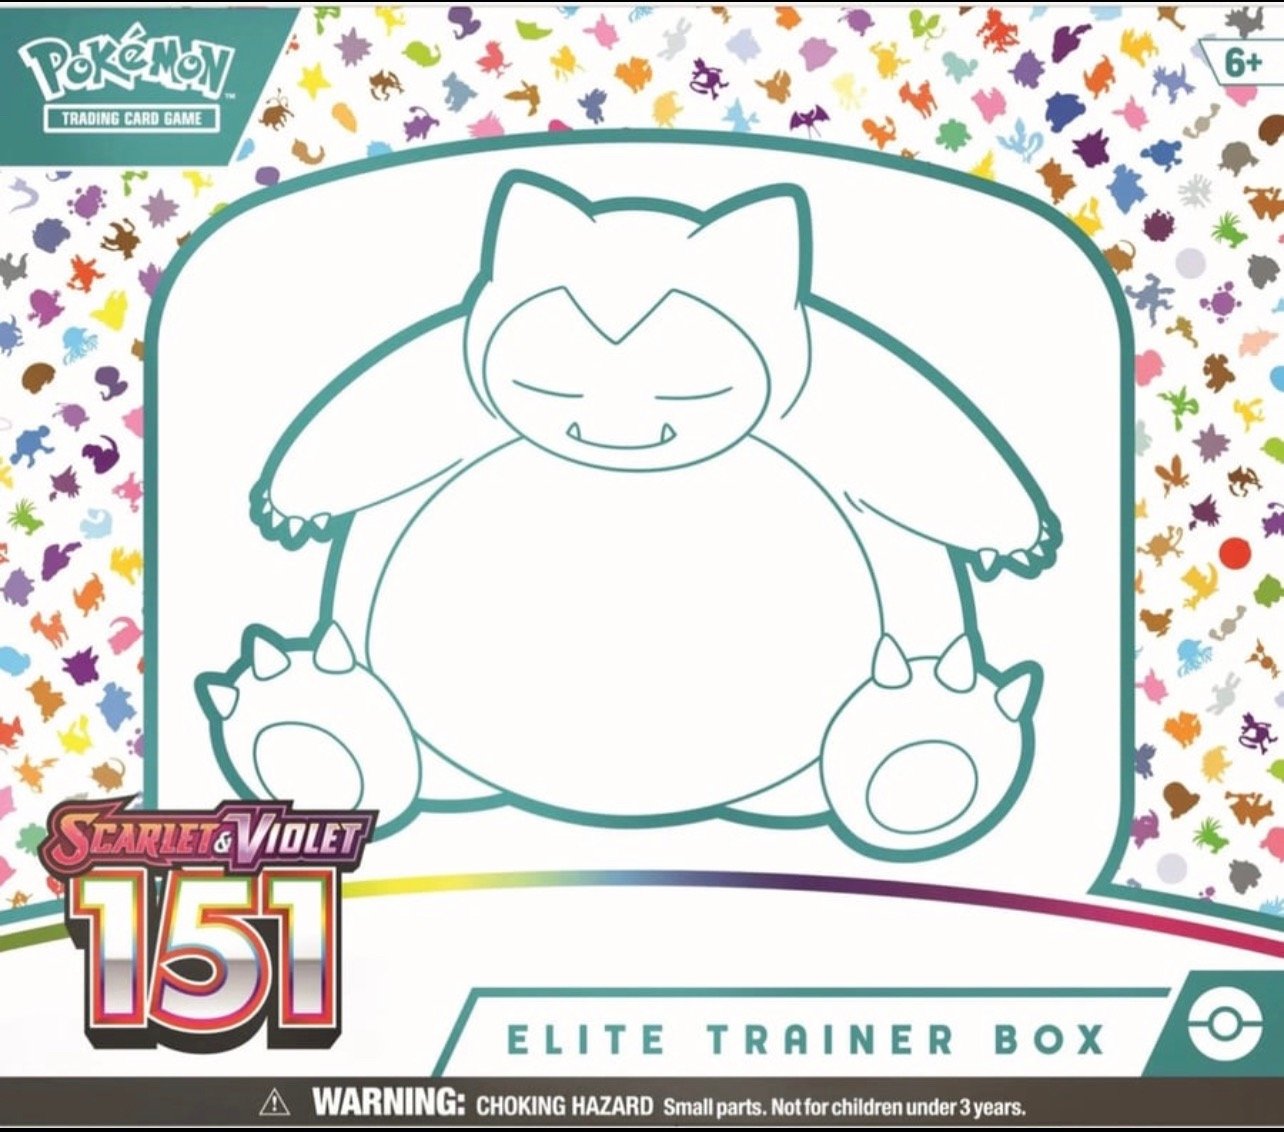 Pokémon 151 elite trainer box (in store pick up)